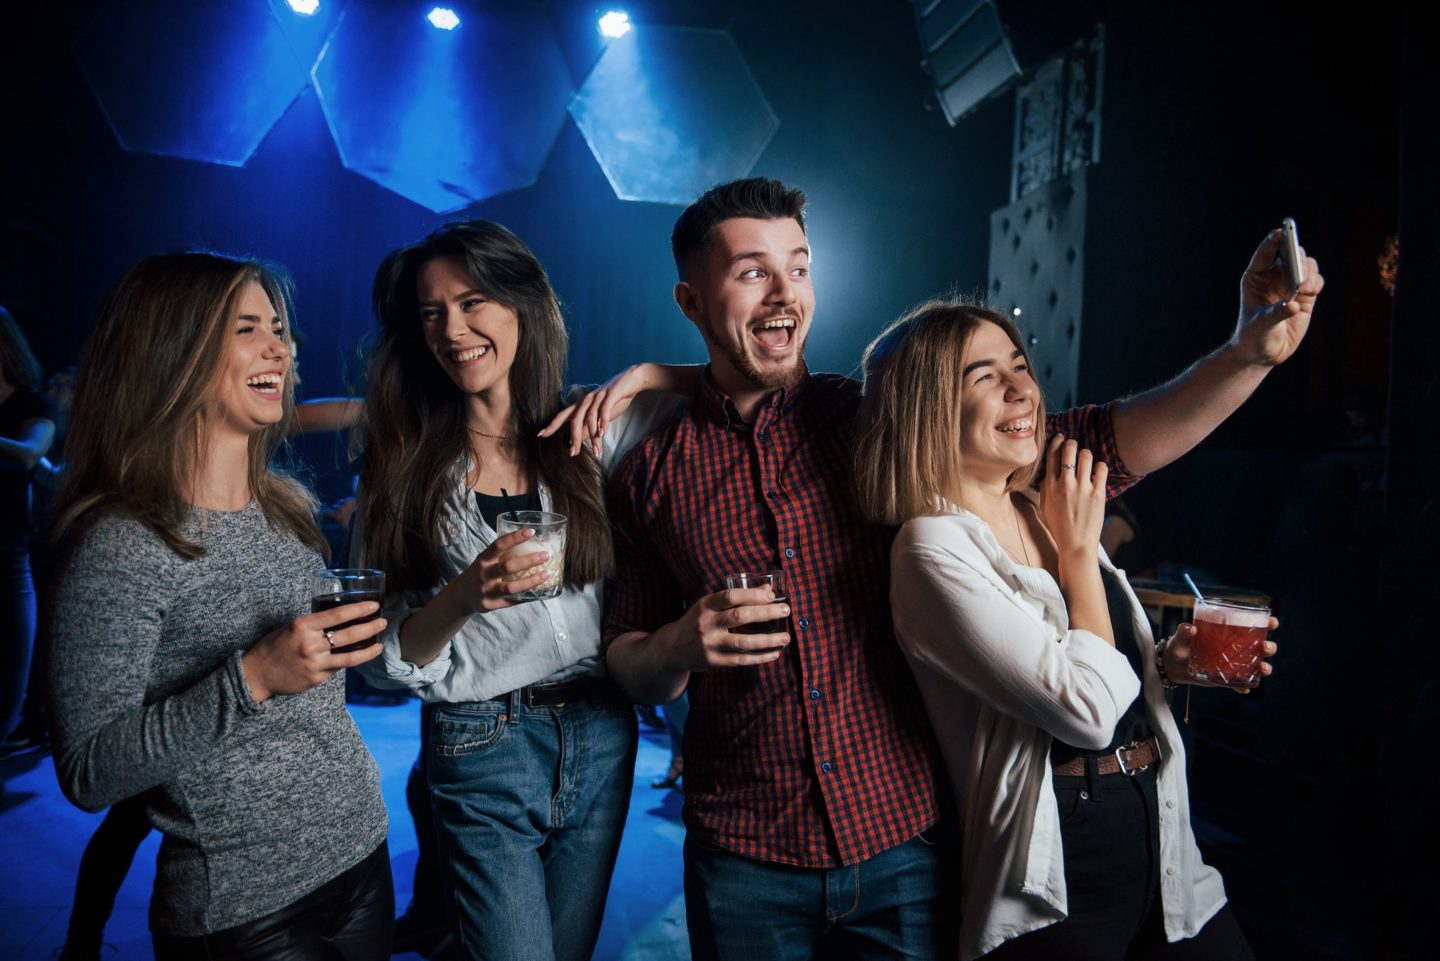 Joking around. Friends taking selfie in beautiful nightclub. With drinks in the hands